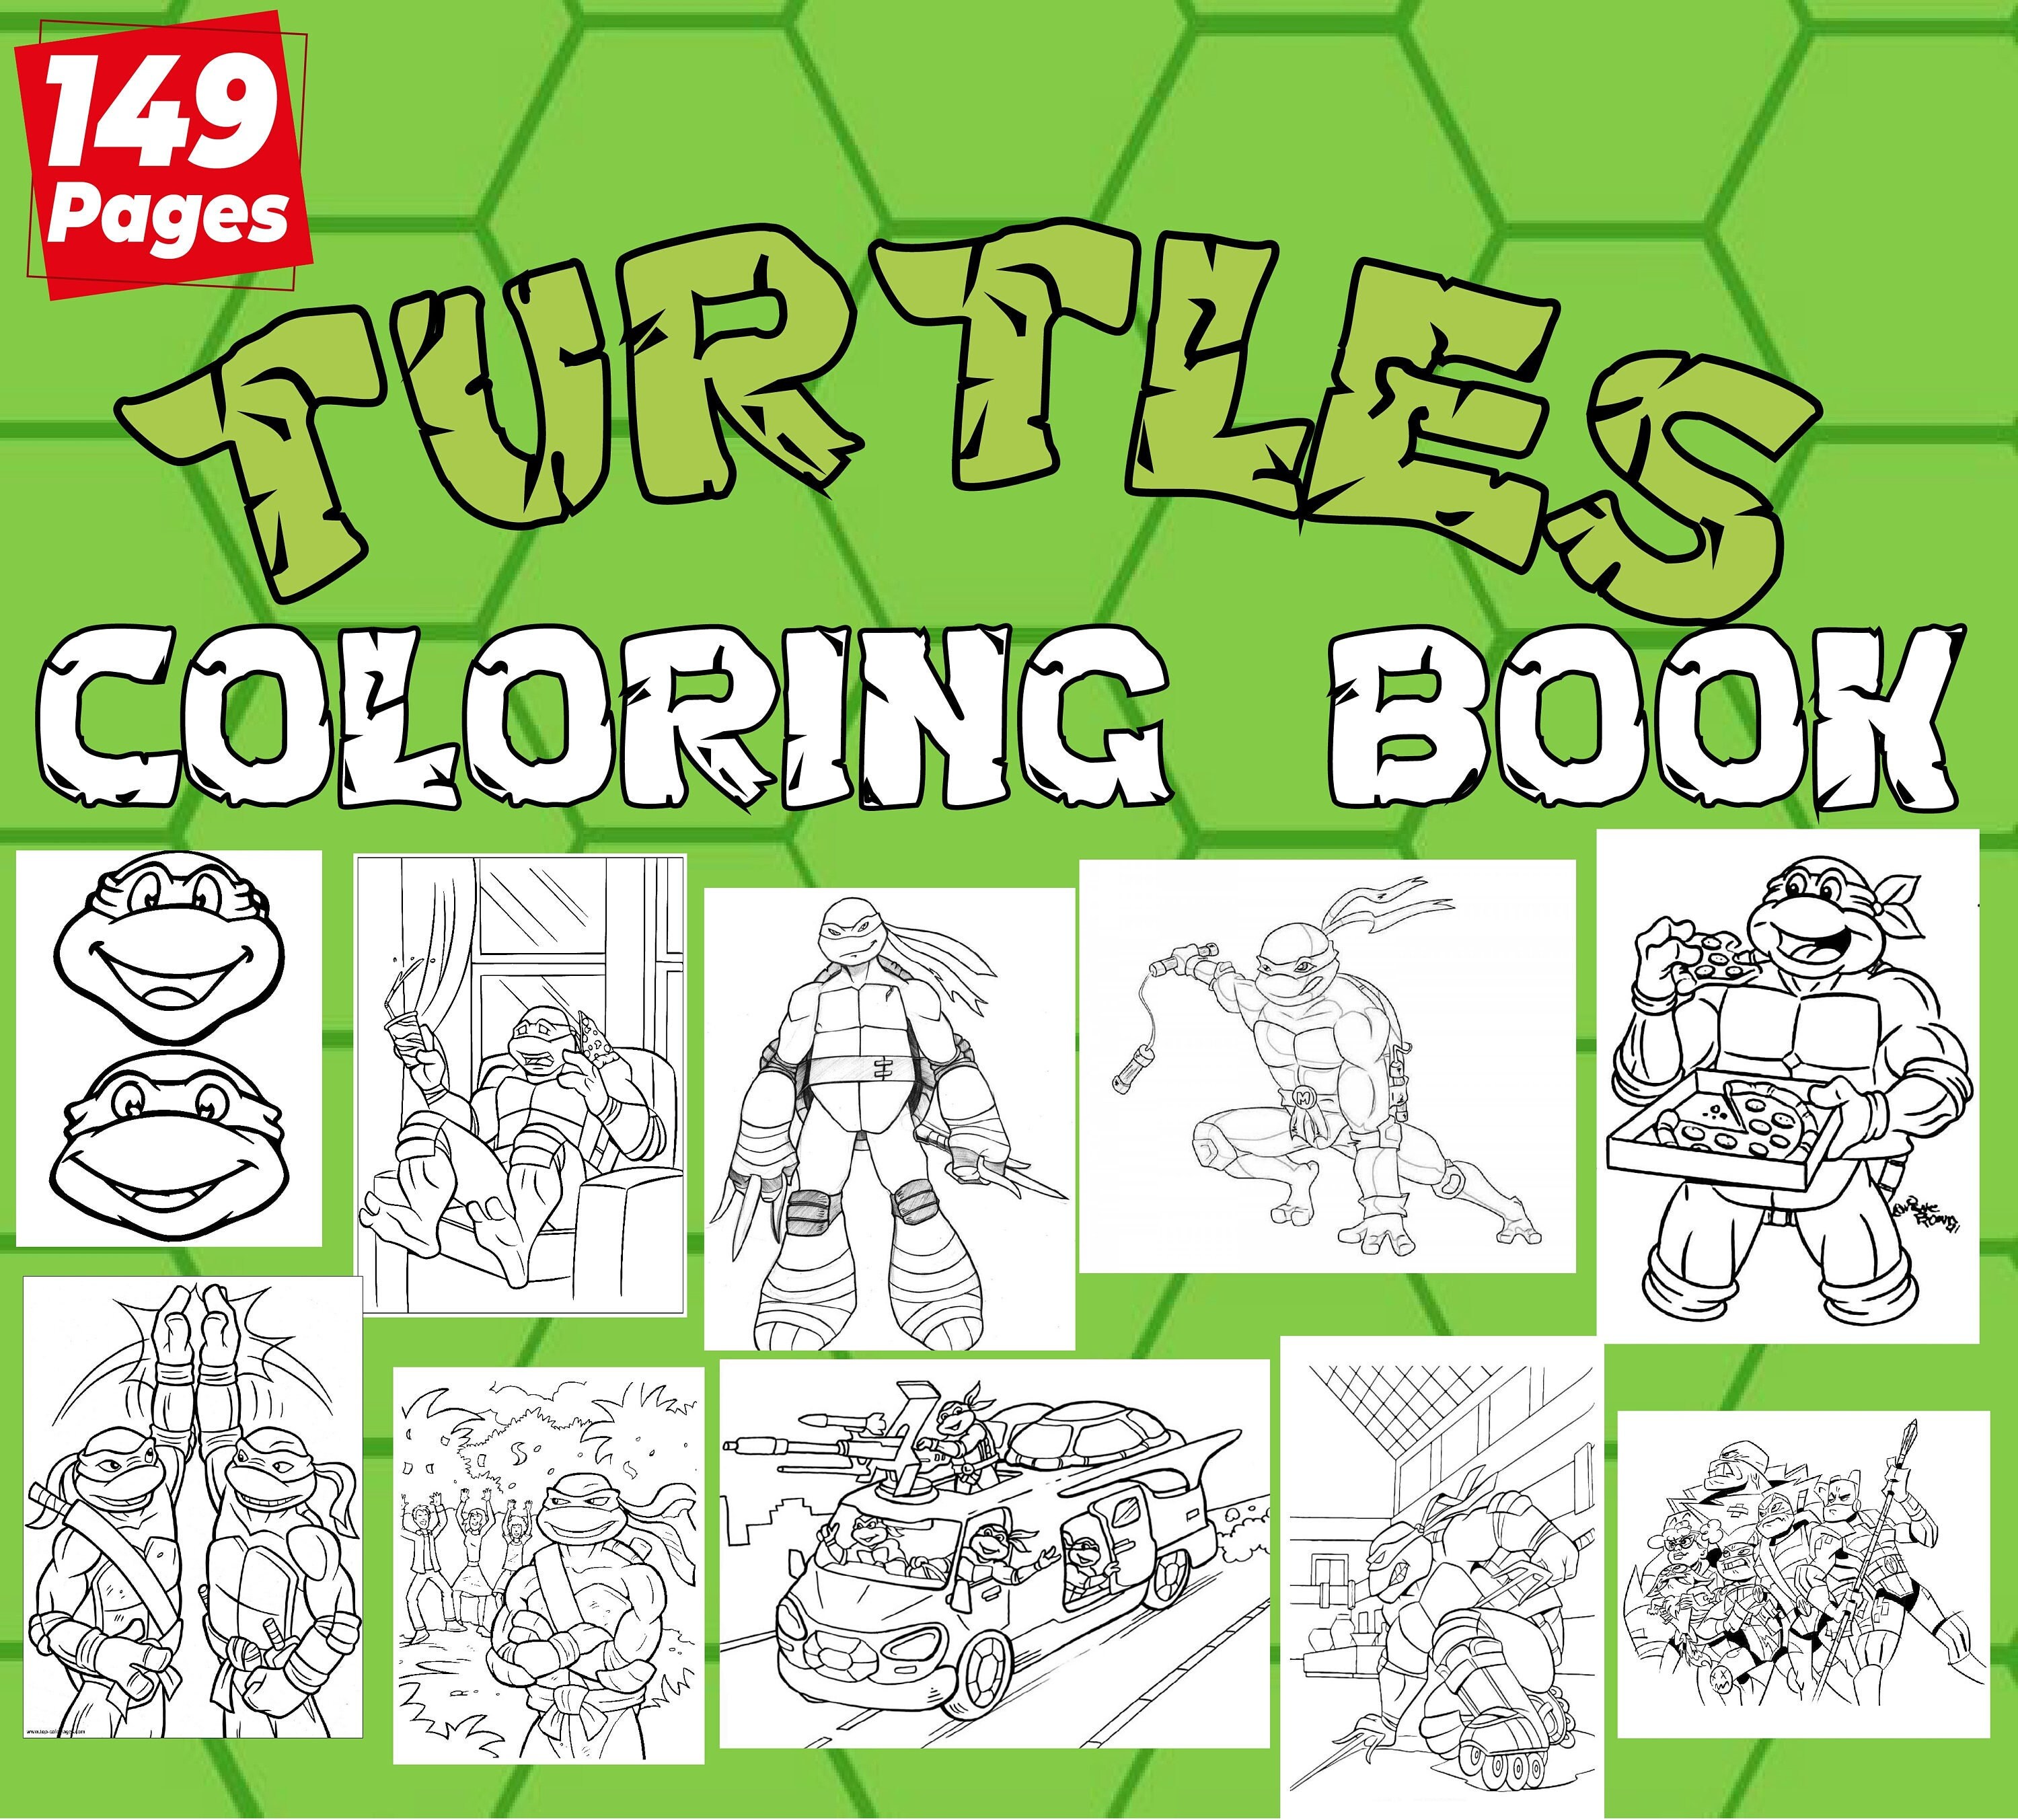 Giant Teenage Mutant Ninja Turtles Coloring Pages, Crayola.com